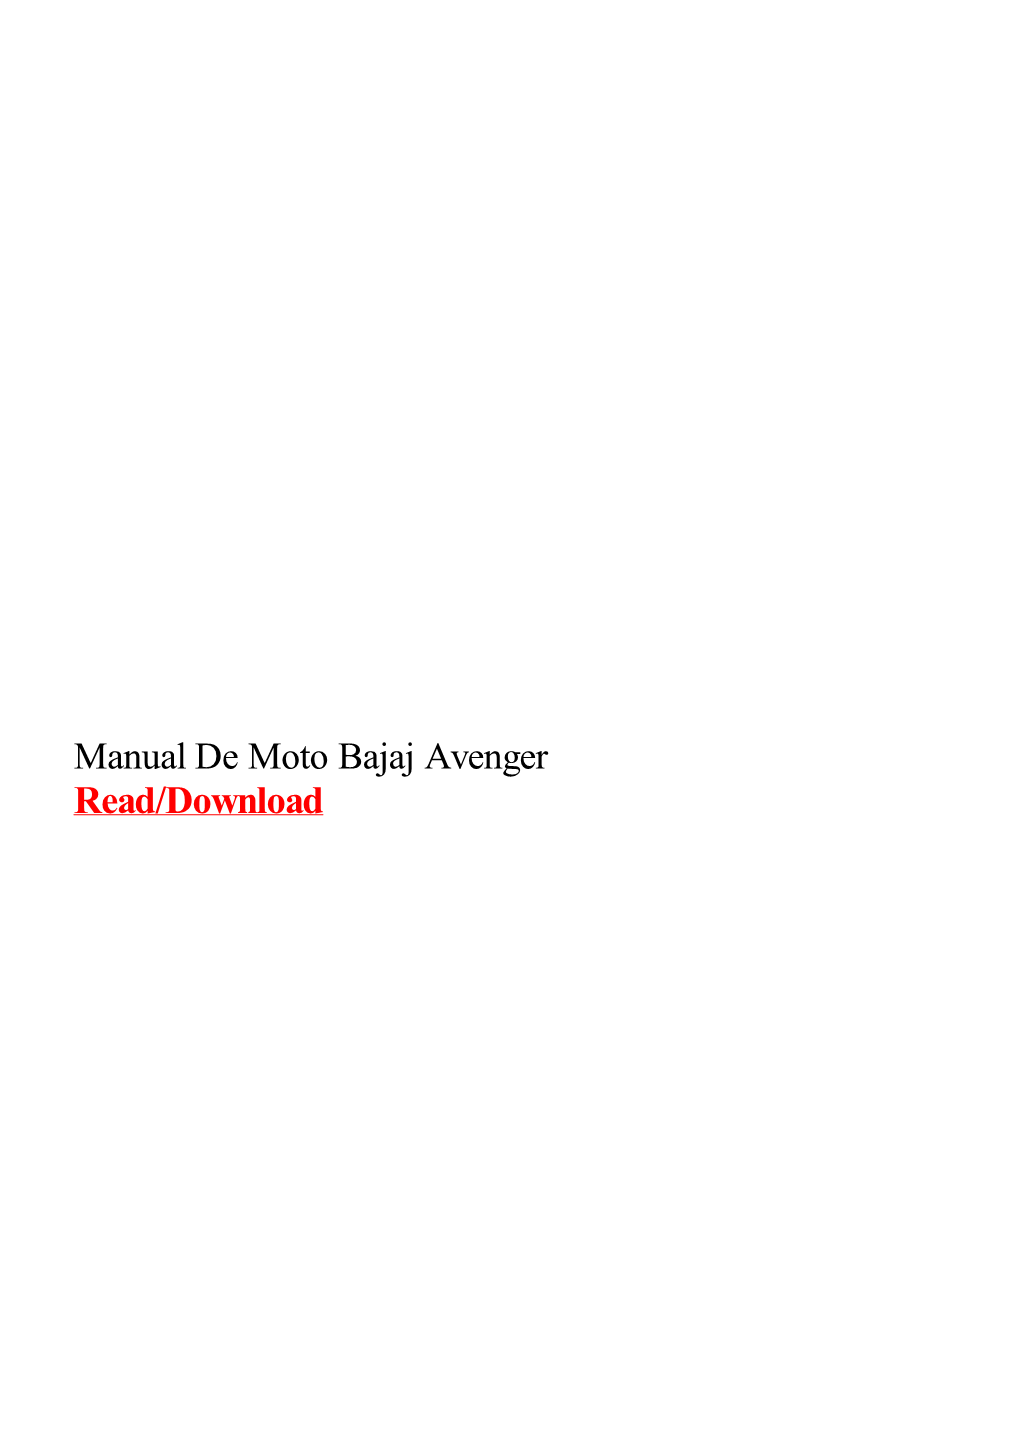 Manual De Moto Bajaj Avenger